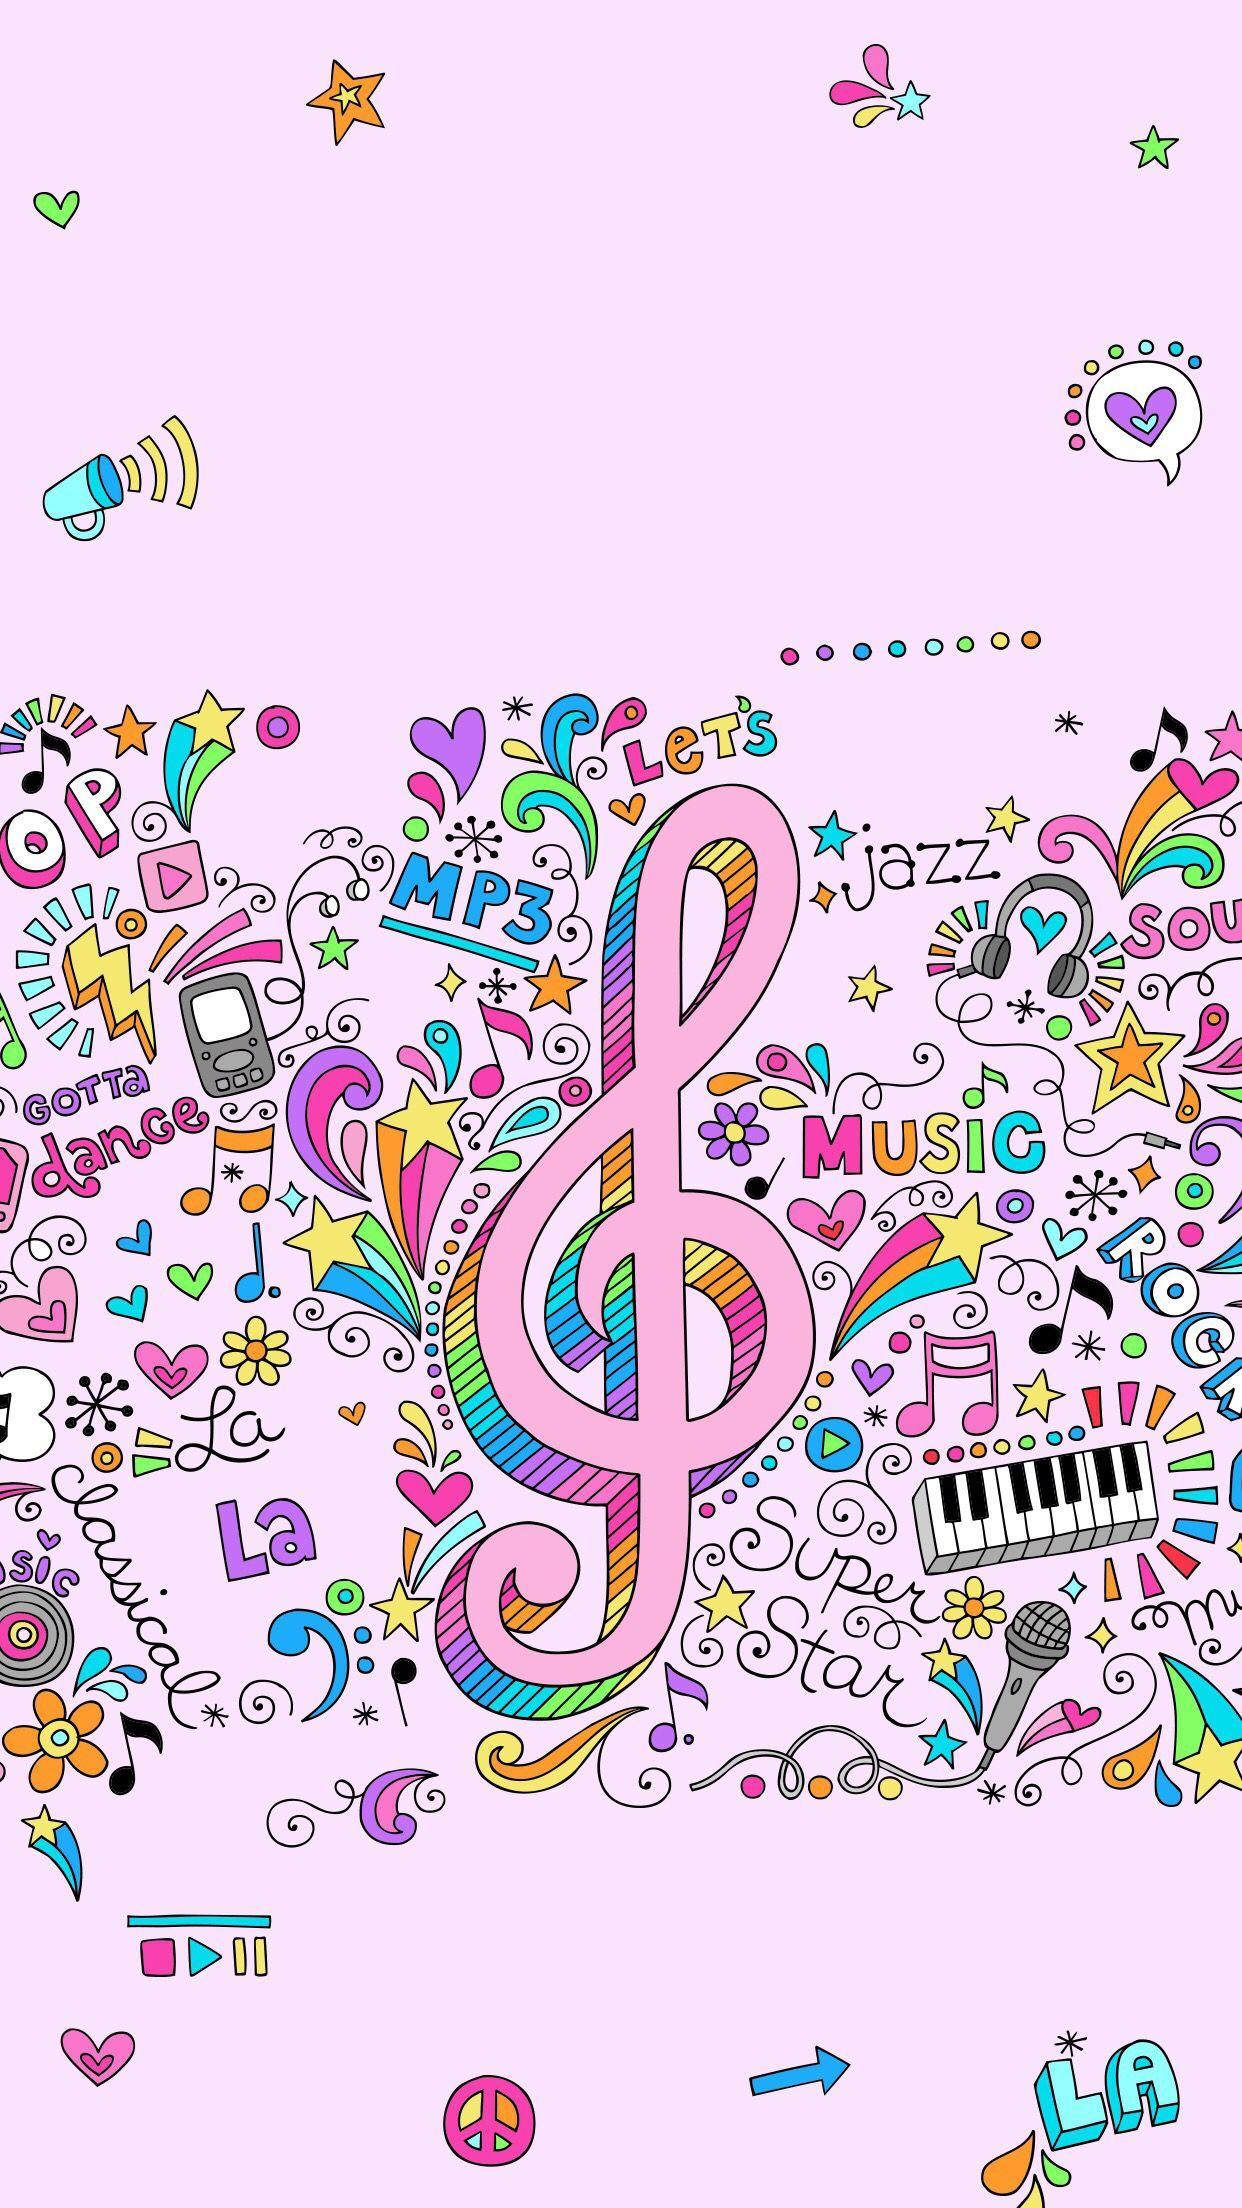 Deep bluepurple music note background Iphone Wallpapers Phones  Screensaver Phones Backgrounds Music Note  Music notes background Music  wallpaper Music notes